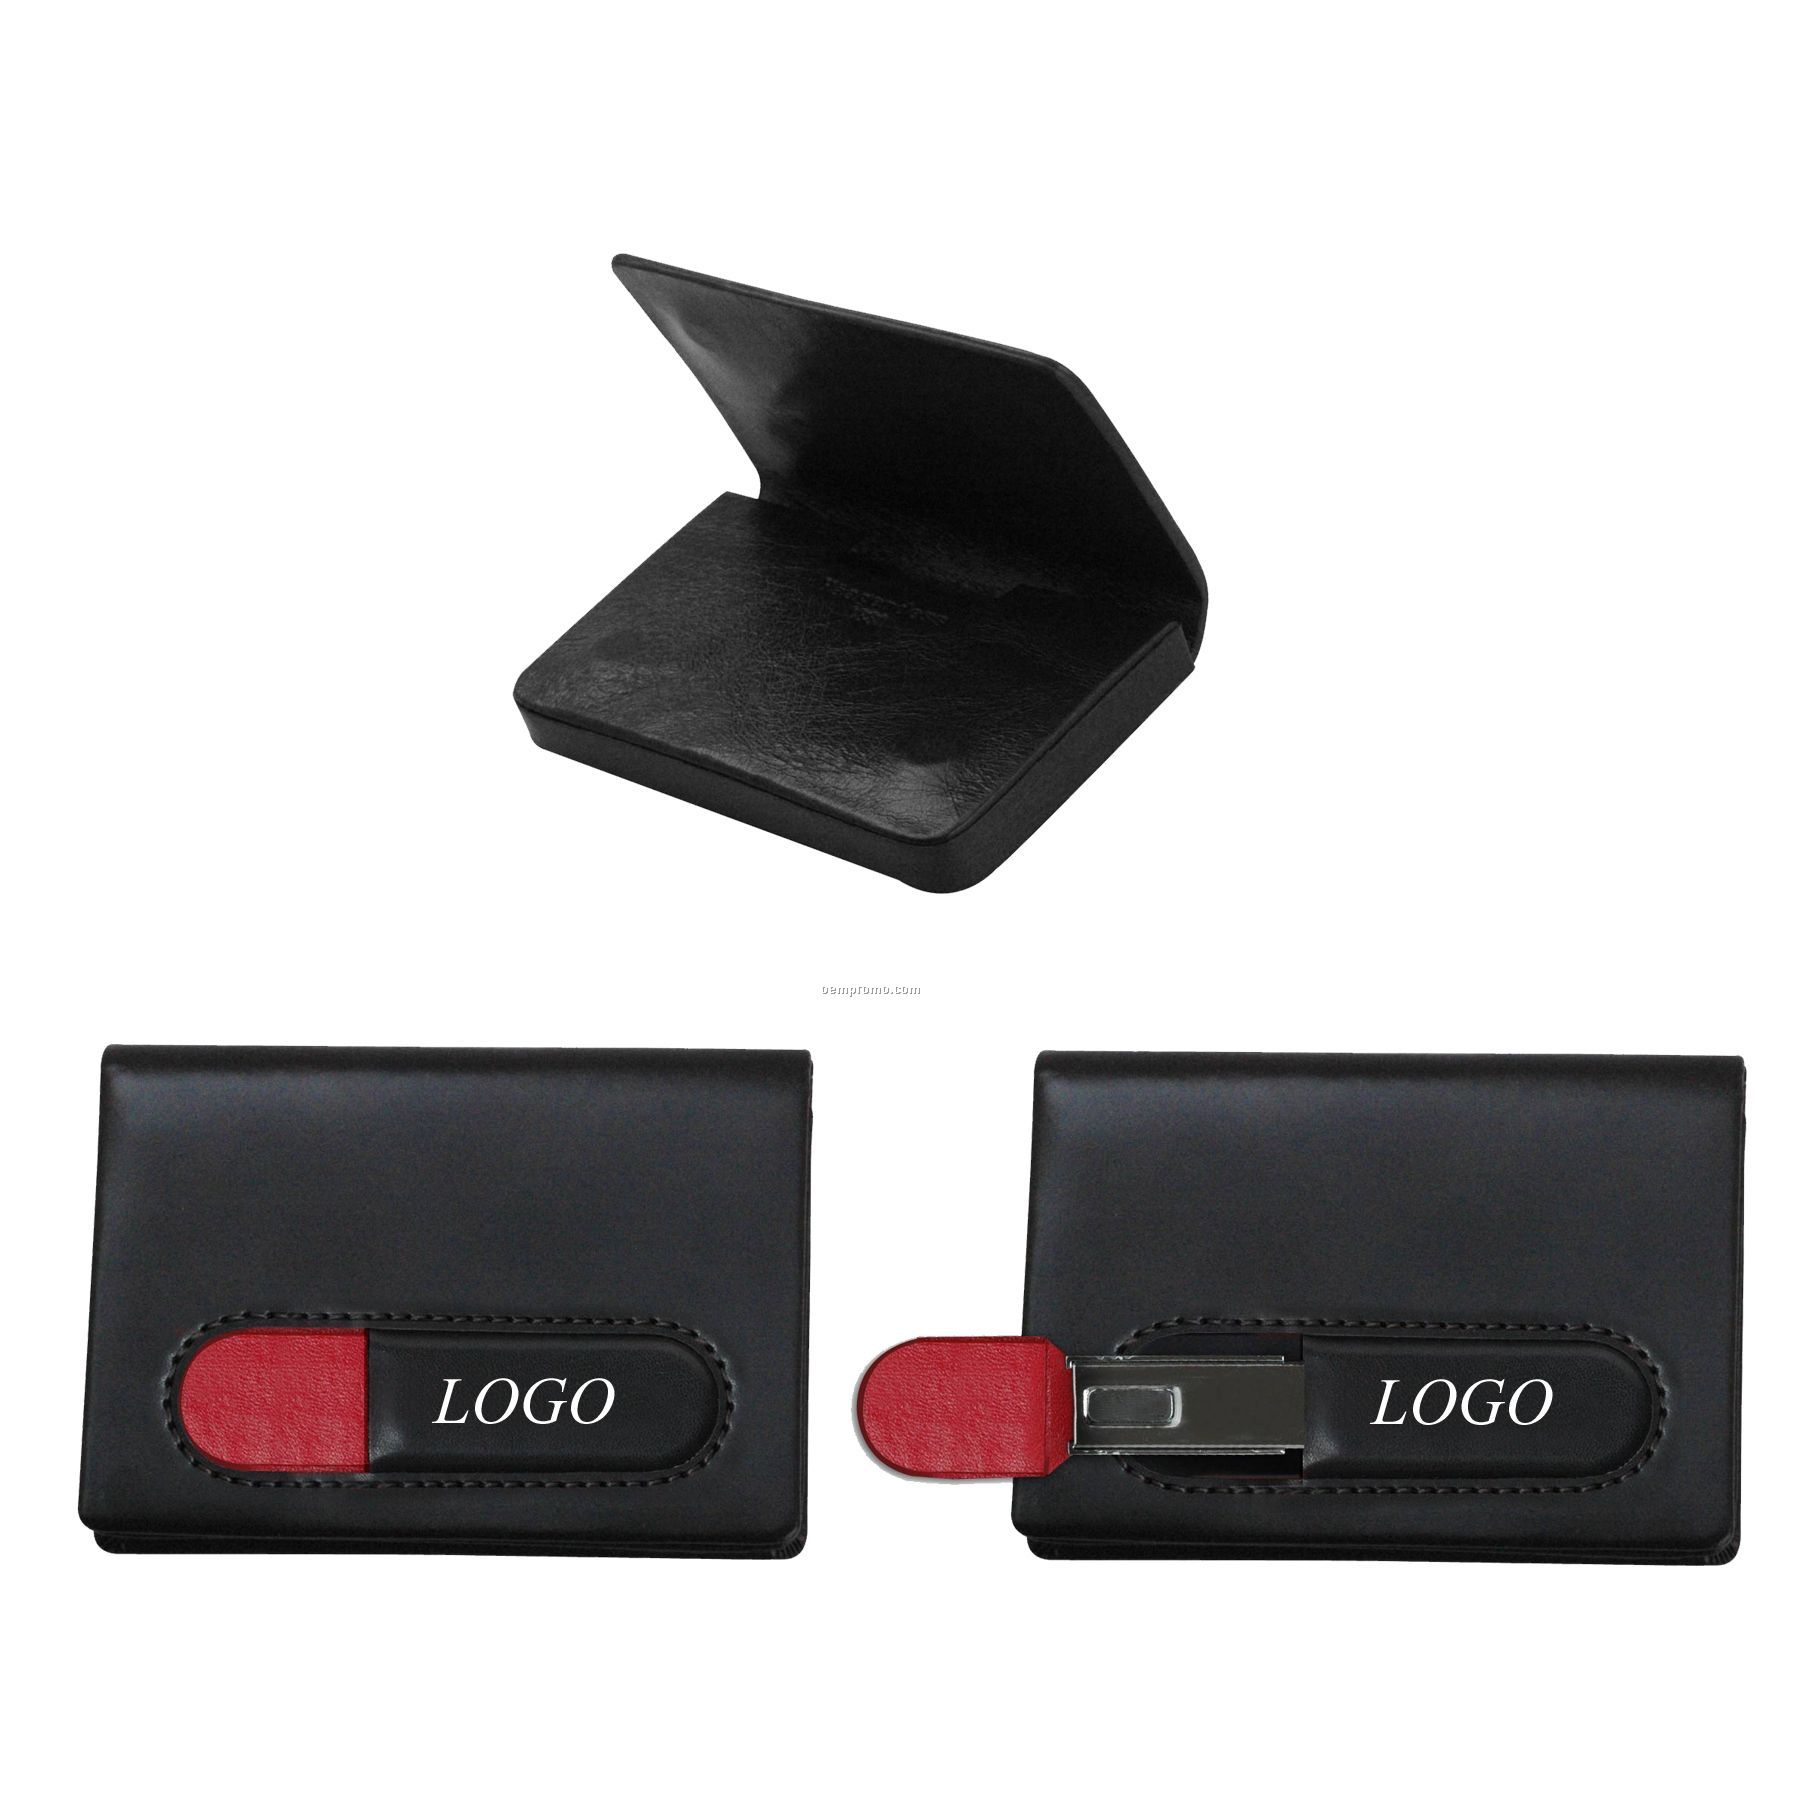 Business Card Holder USB Drive (Bchusb02)